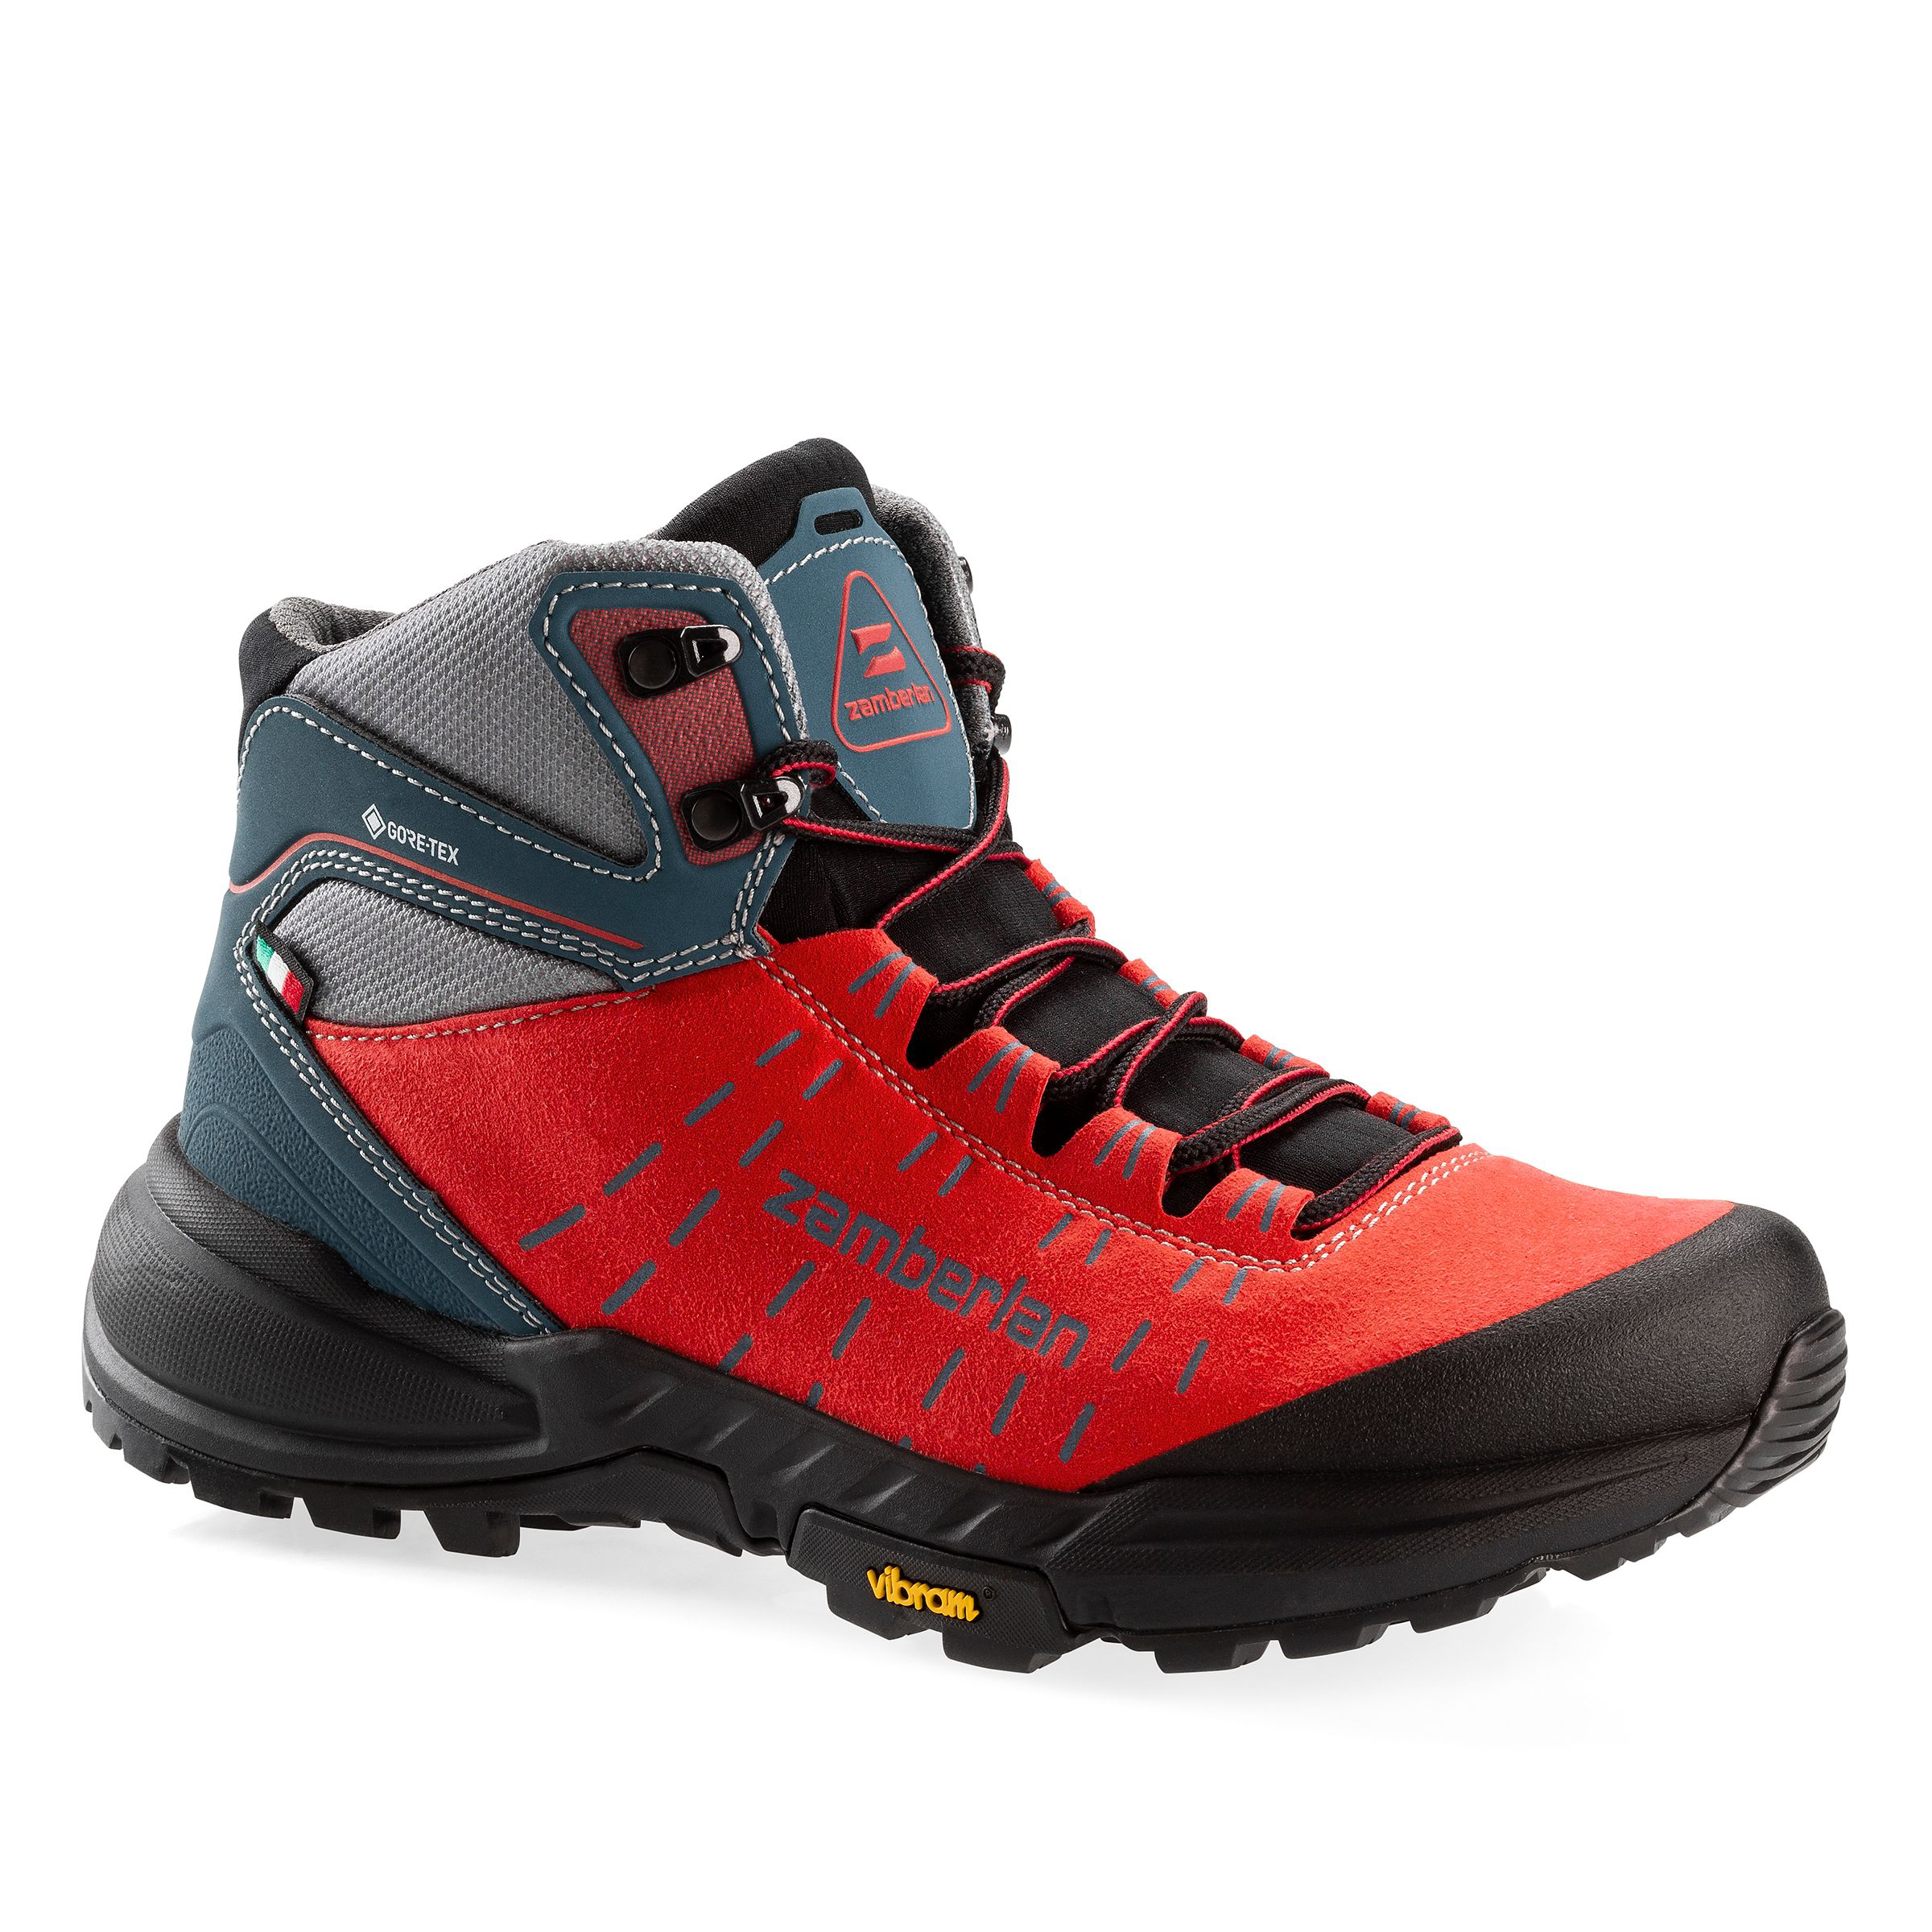 Zamberlan 334 Circe GTX Waterproof Hiking Boots for Ladies - Red - 10M